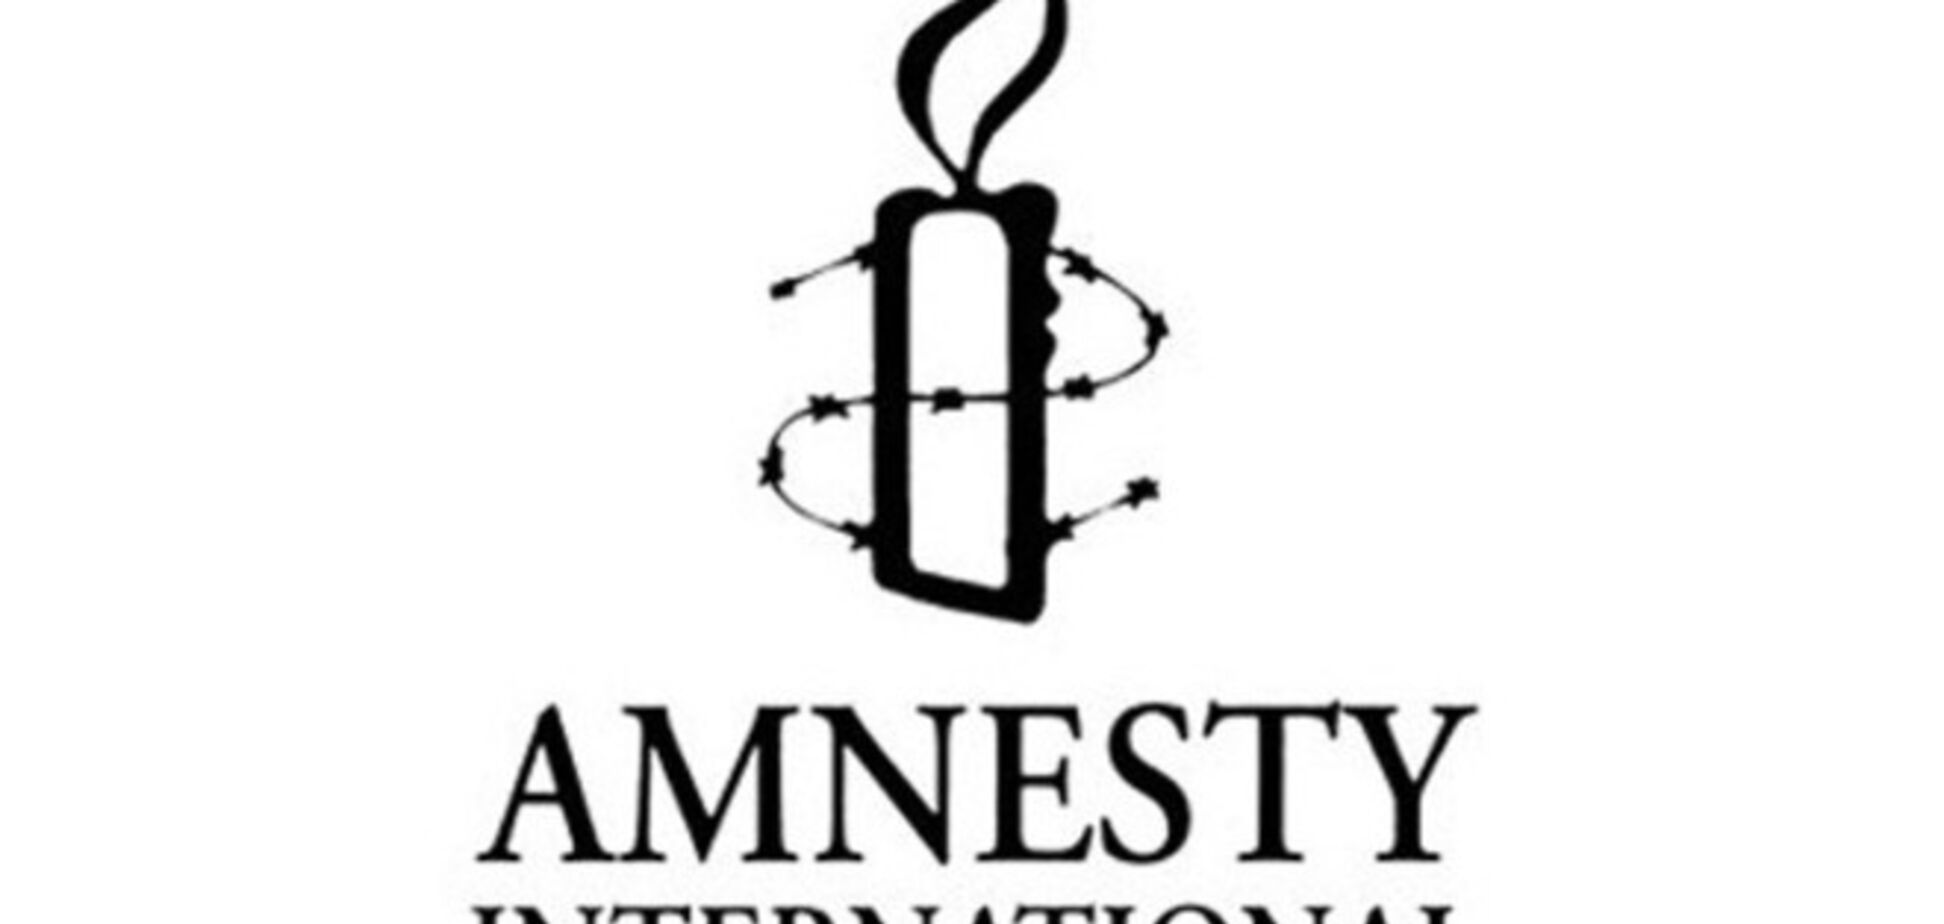 Amnesty International: реакція світу на конфлікт в Україні ганебна